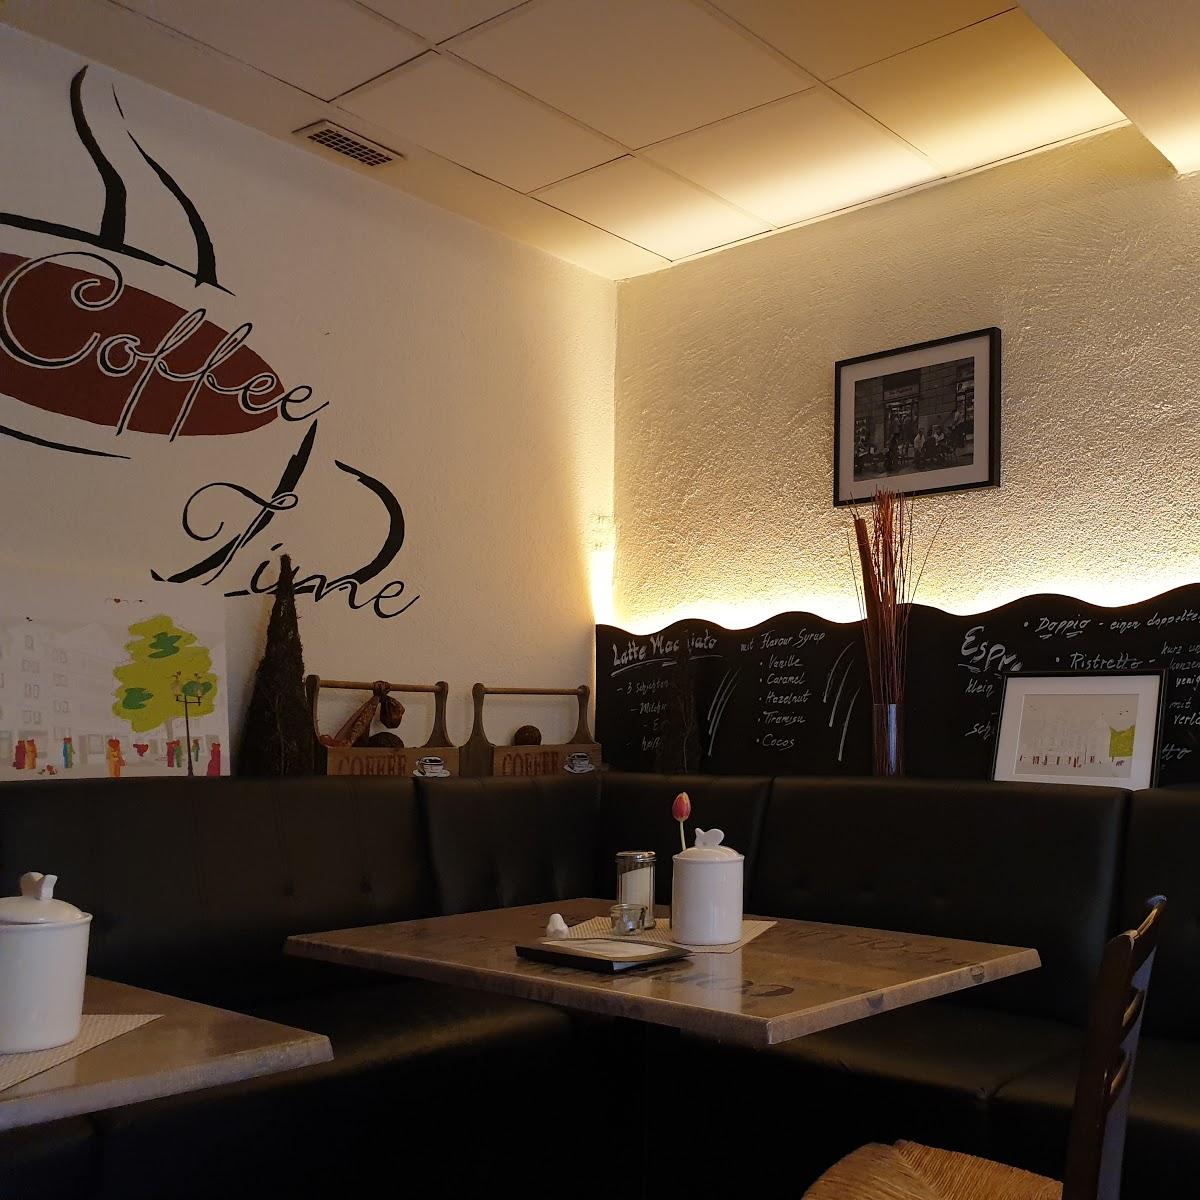 Restaurant "Café la momenta" in Herborn